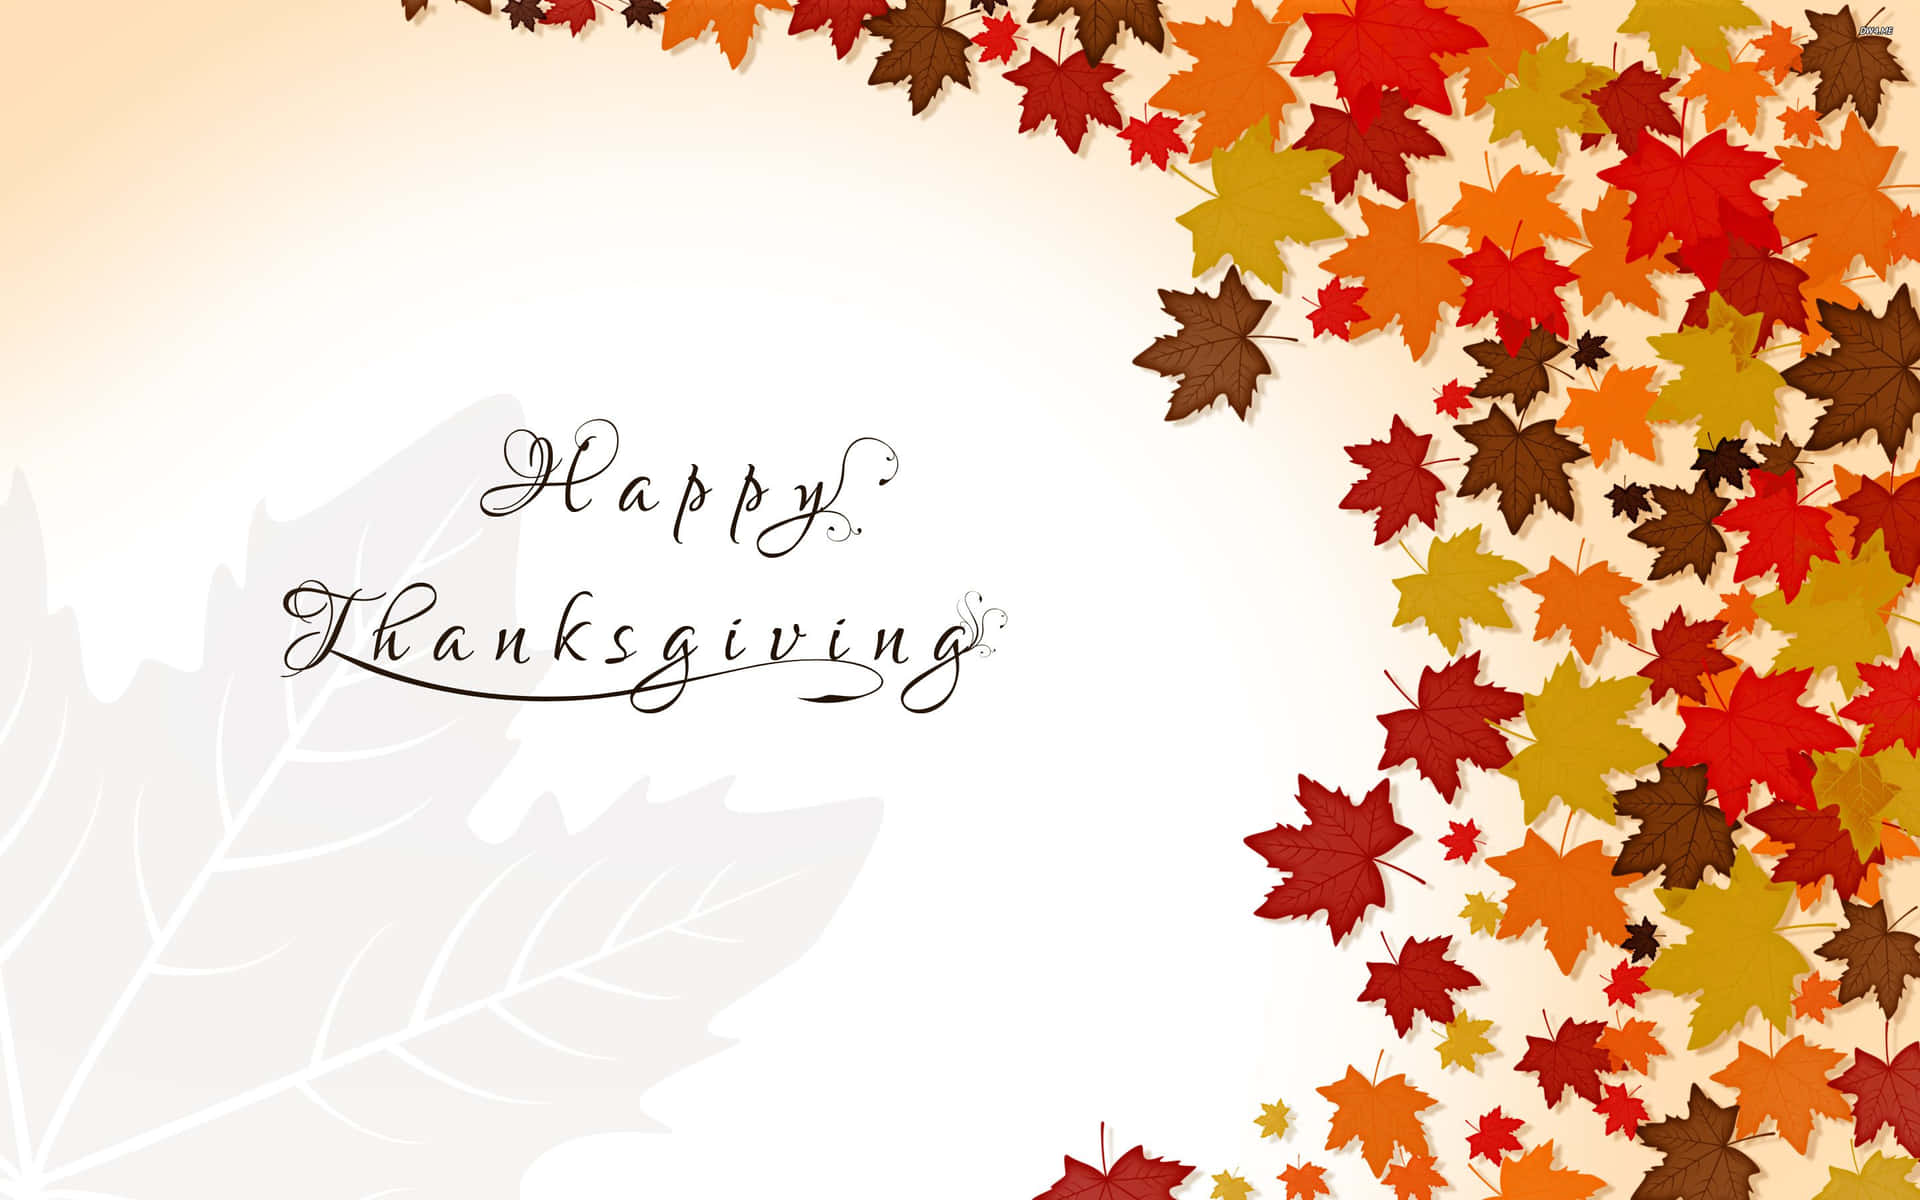 'Happy Thanksgiving!' Wallpaper